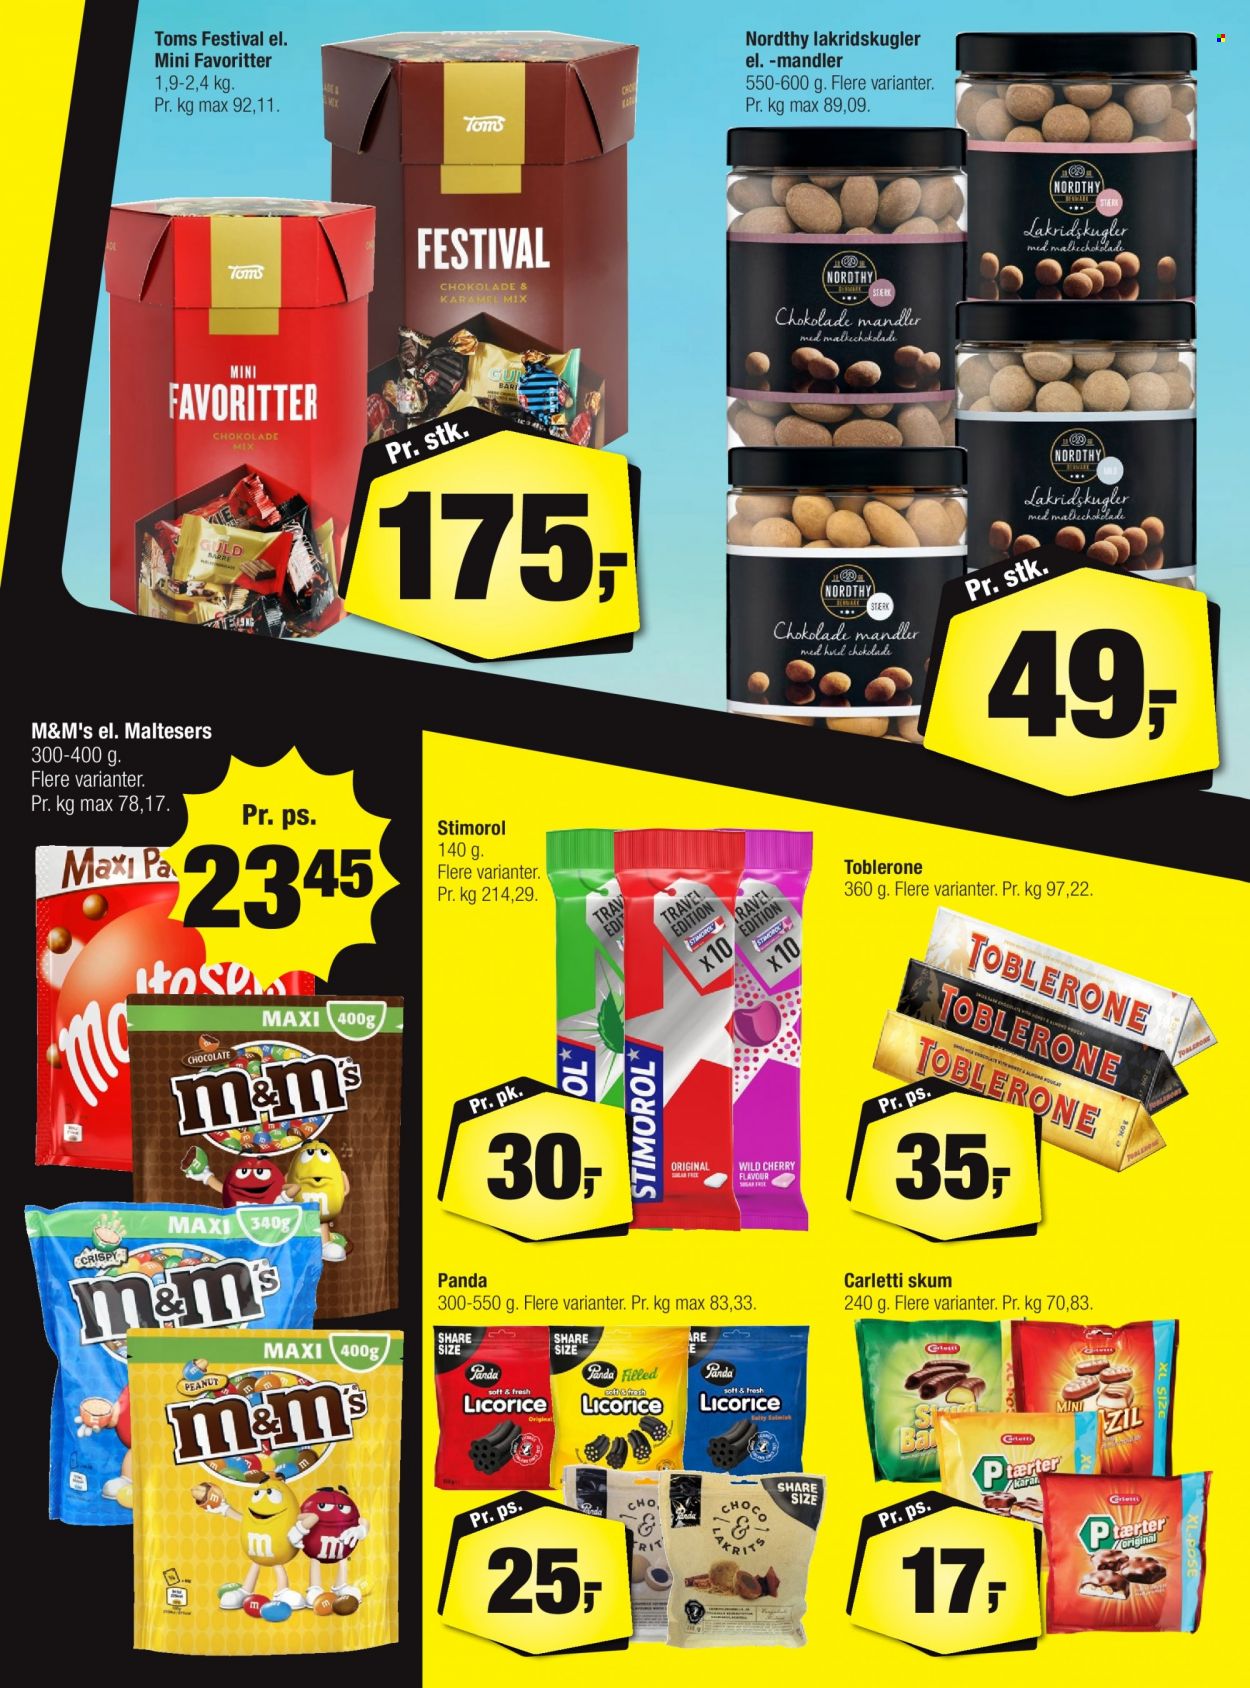 thumbnail - Calle tilbud  - 8.6.2022 - 28.6.2022 - tilbudsprodukter - Toblerone, guldbarre, chokolade, karamel, M&M's, nougat, Toms, Carletti, mandler. Side 5.